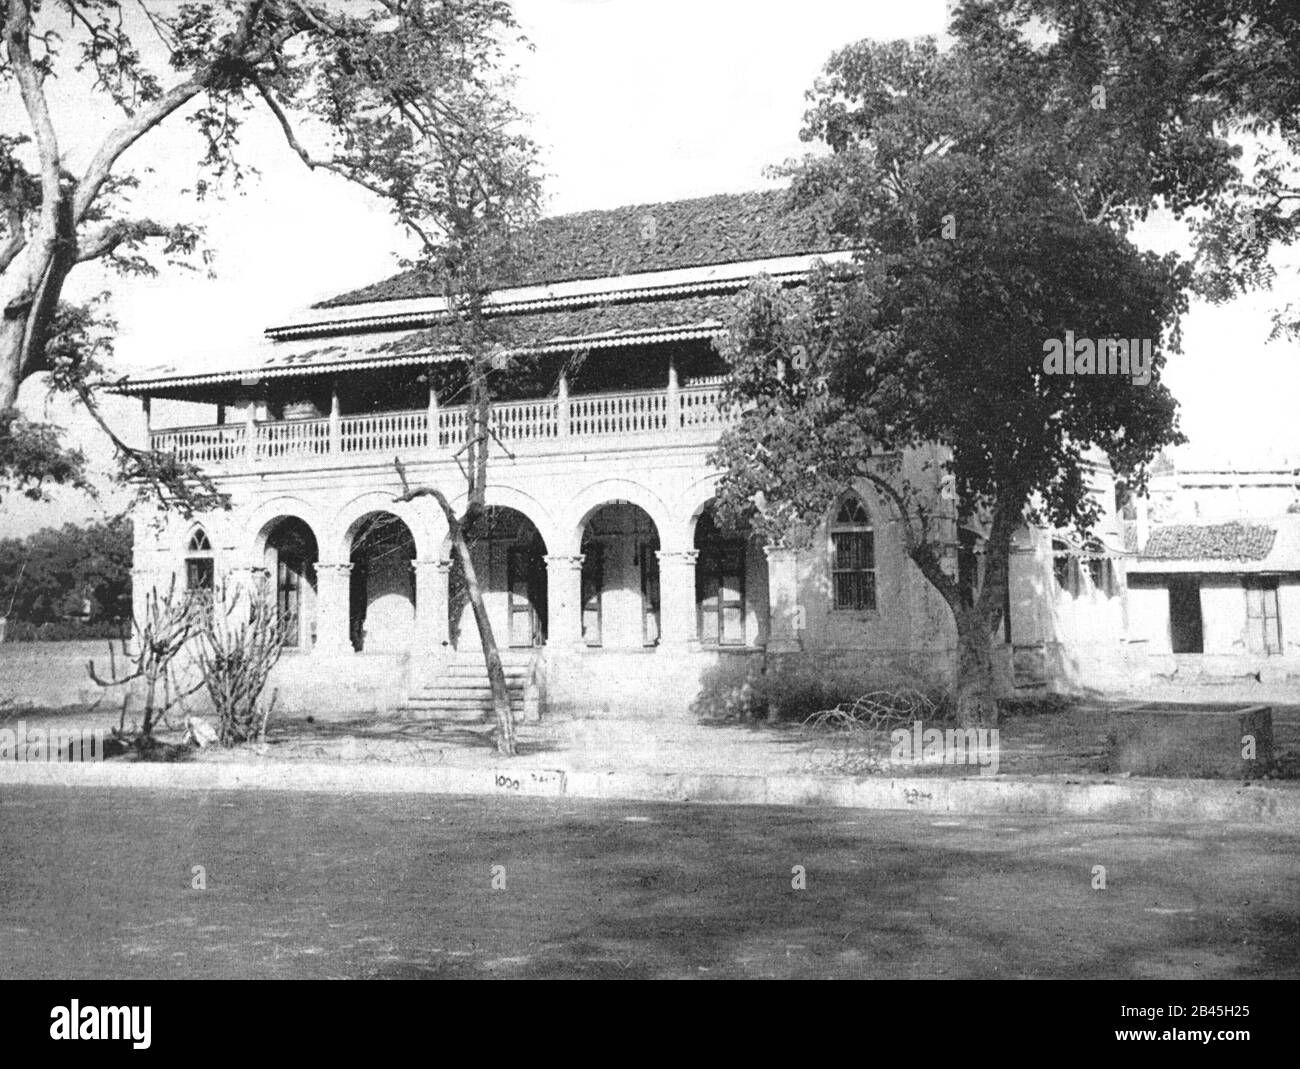 Mahatma Gandhi erster Ashram, Kochrab Ashram, Ahmedabad, Gujarat, Indien, Asien, 25. Mai 1915, alter Jahrgang 1900s Bild Stockfoto